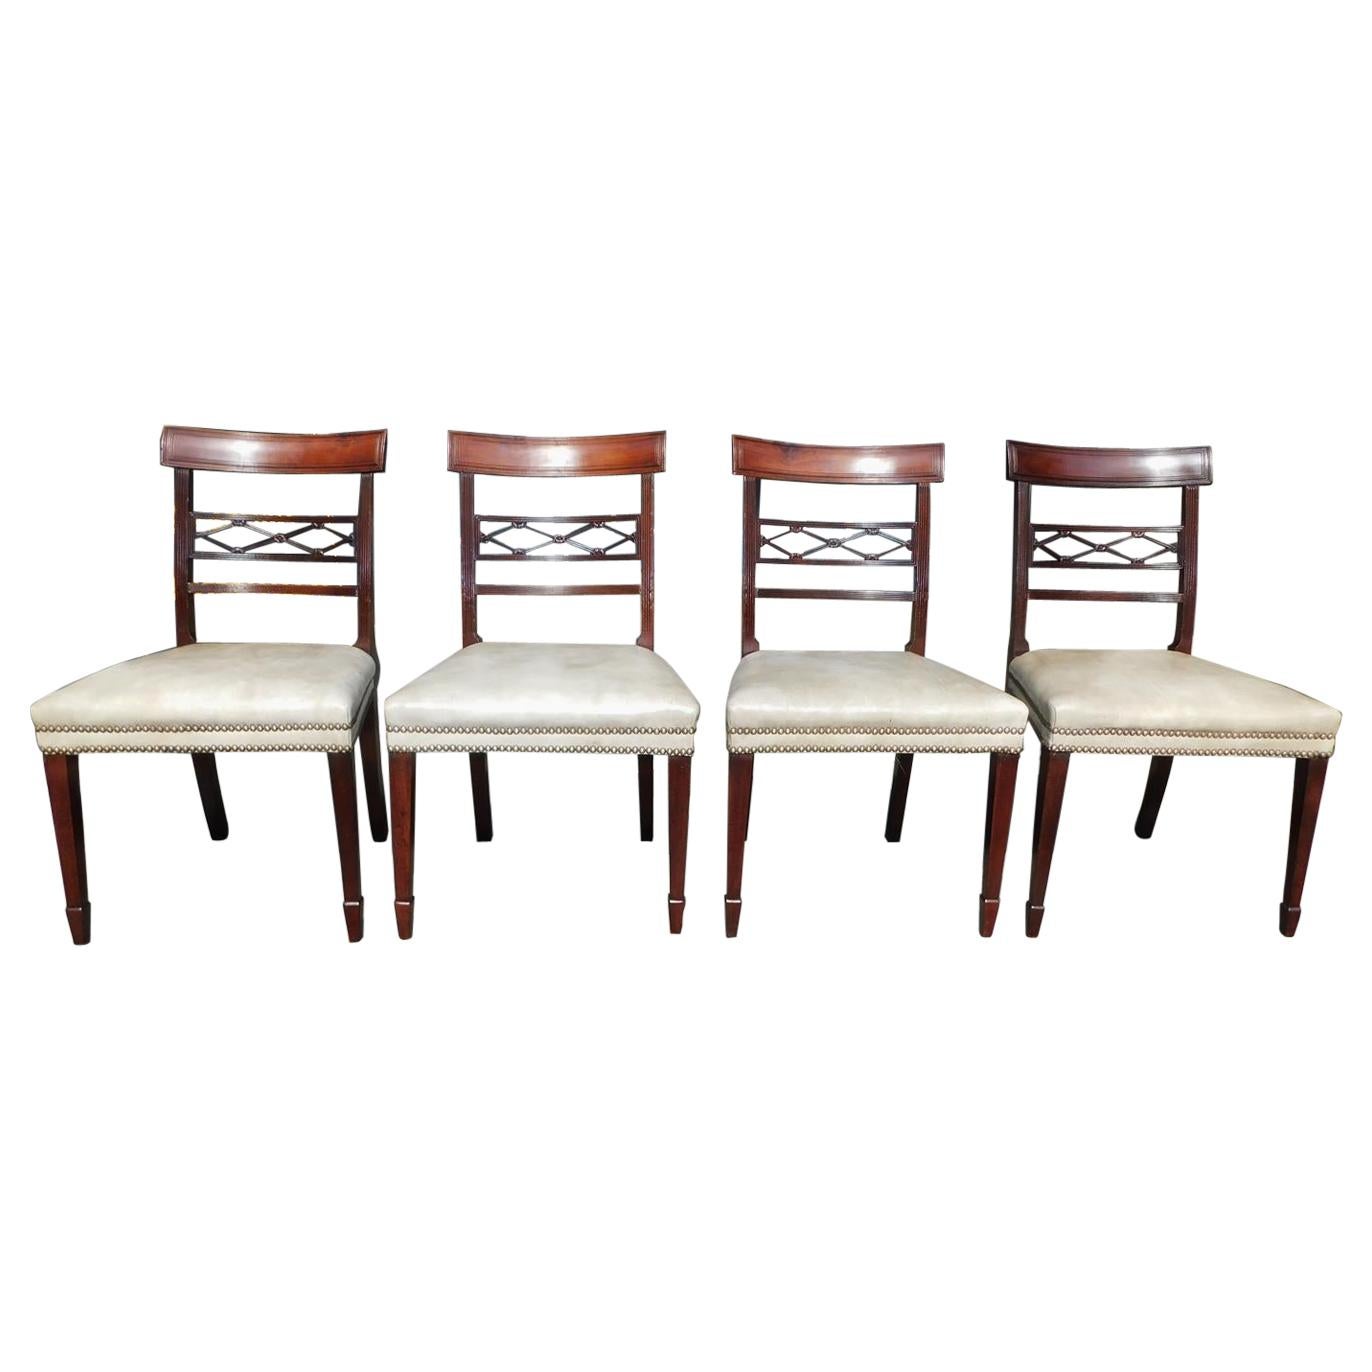 Set of Four English Regency Mahogany Dining Room Chairs, Circa 1810